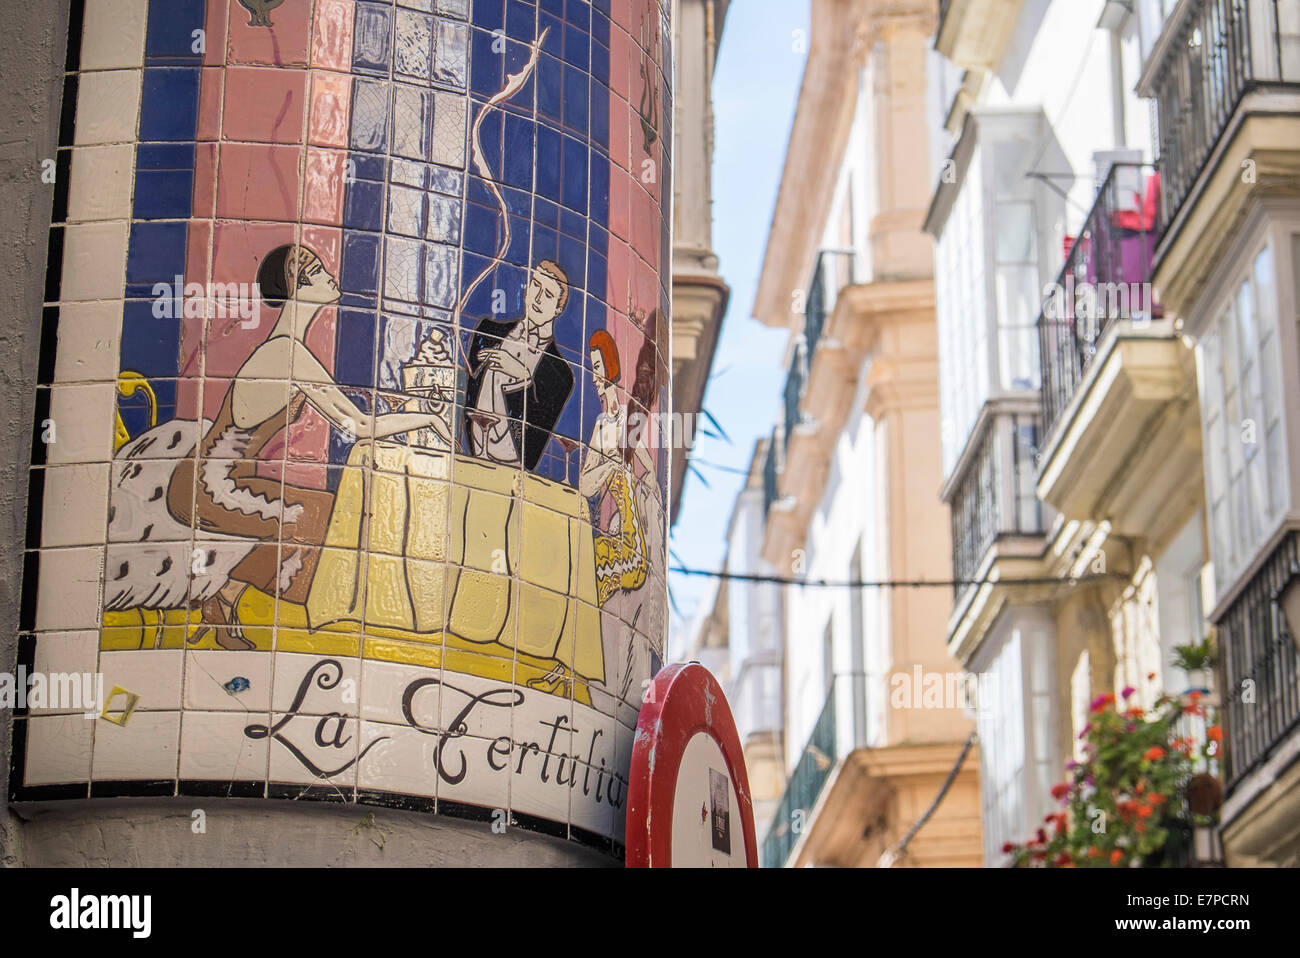 Spanien, Cadiz, Nahaufnahme von Mosaikbild an Wand Stockfoto